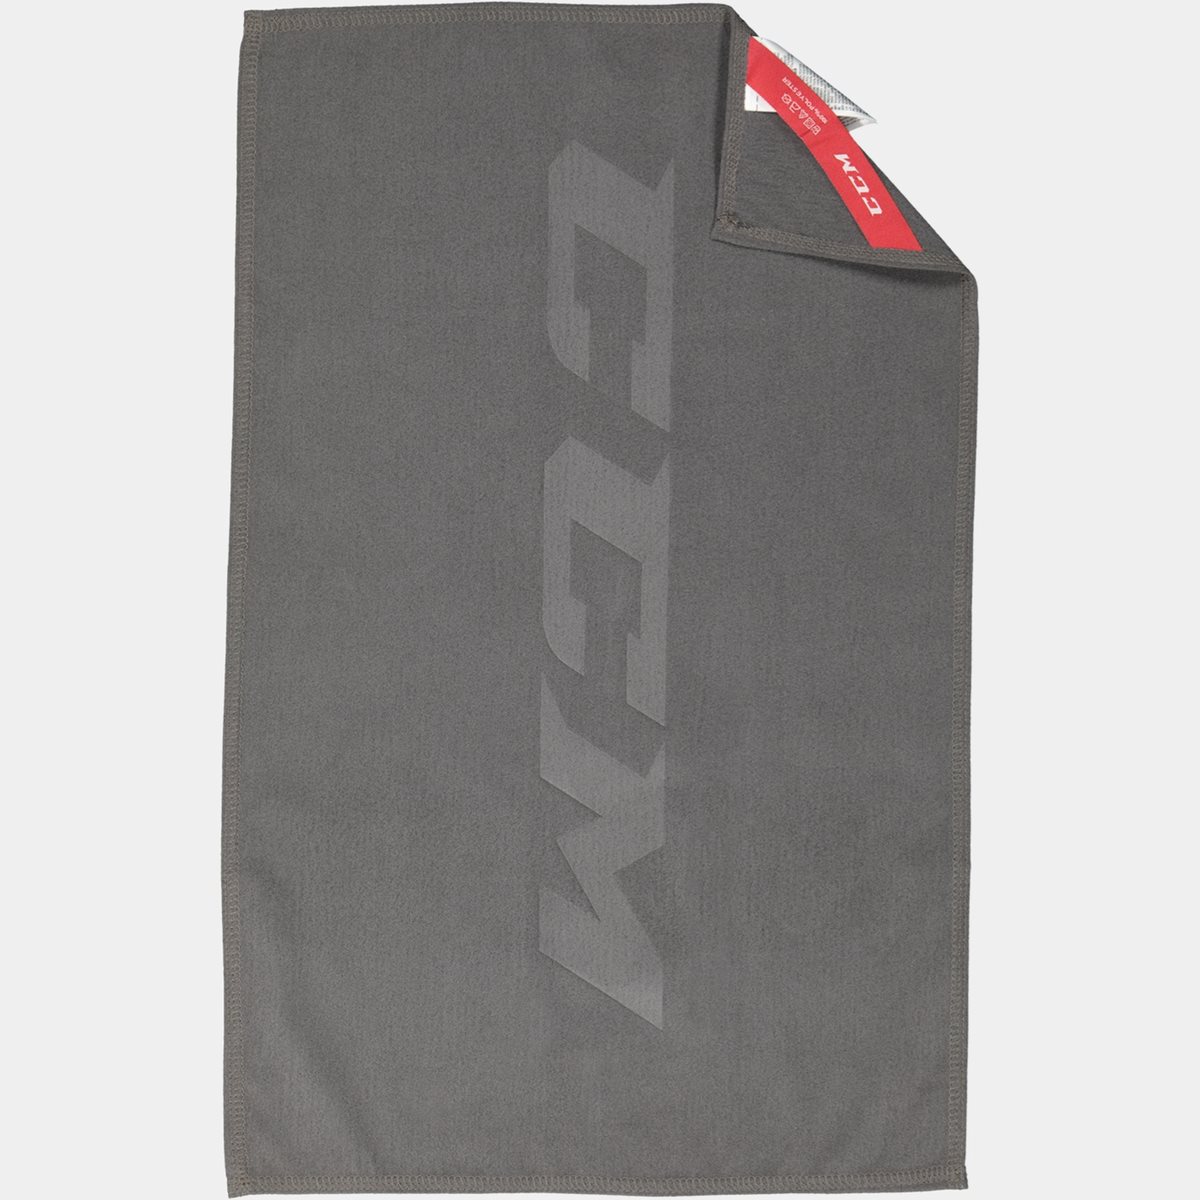 CCM Ice Skate Blade Towel - Grey